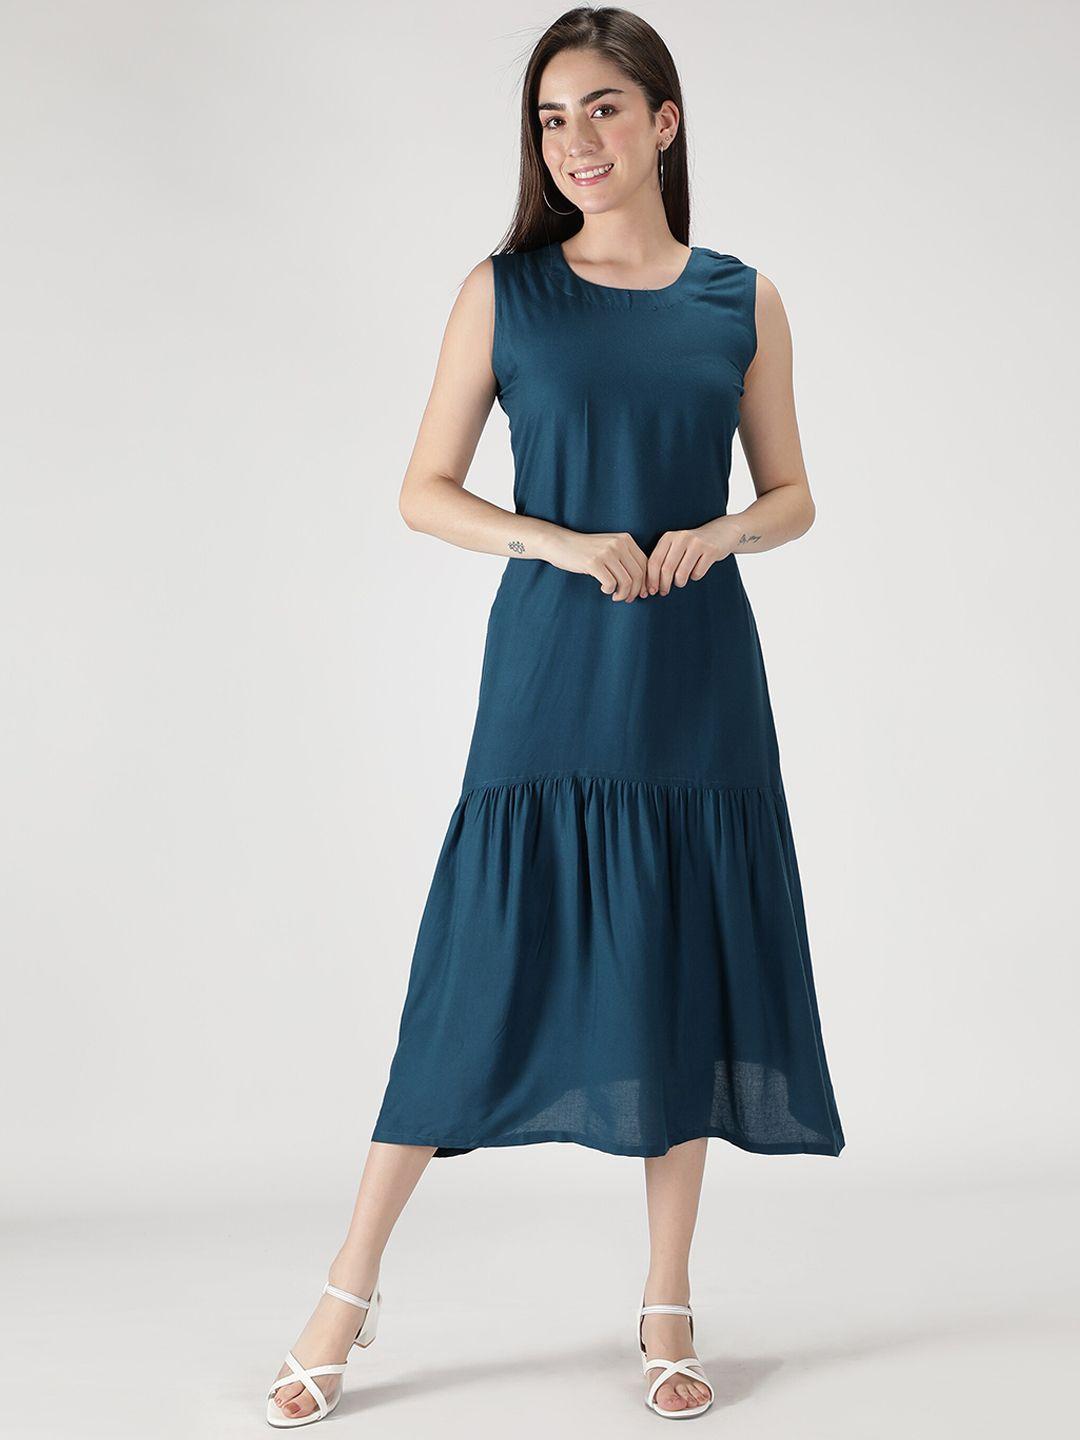 fabclub-women-teal-blue-solid-plain-pleated-ethnic-dress